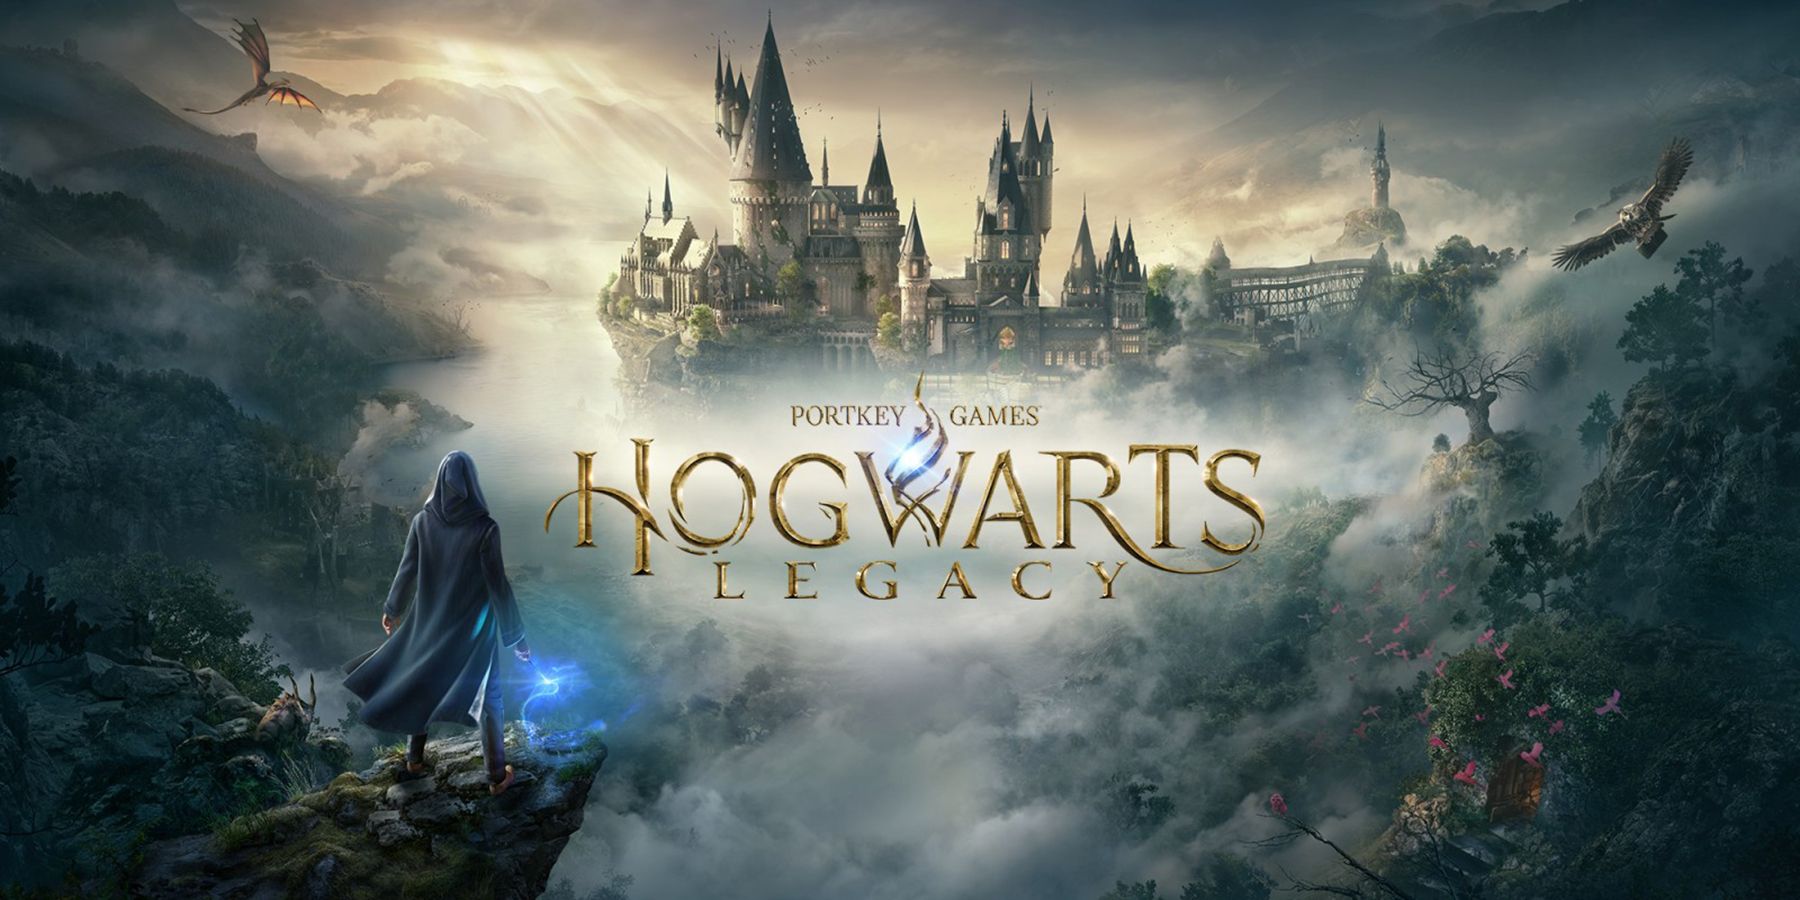 Hogwarts Legacy Has the Chance to Break a 14-Year Streak